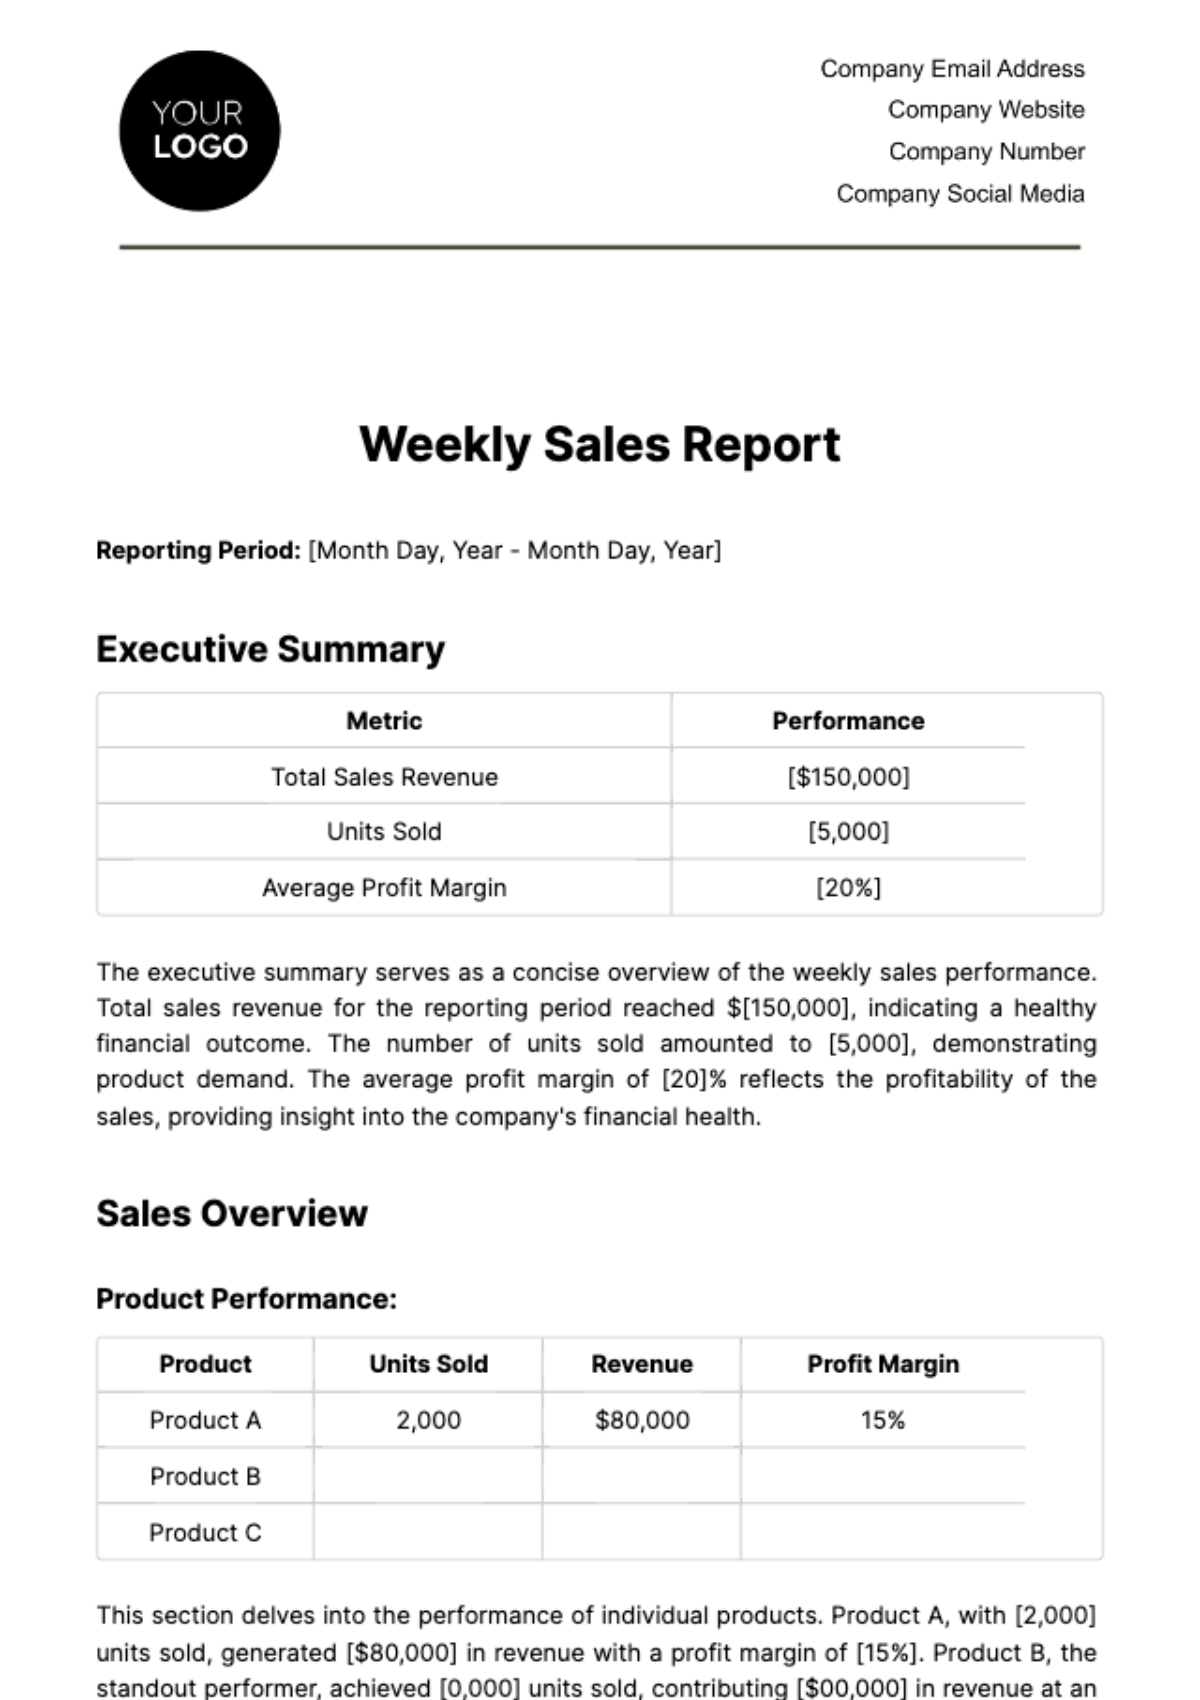 Weekly Sales Report Template